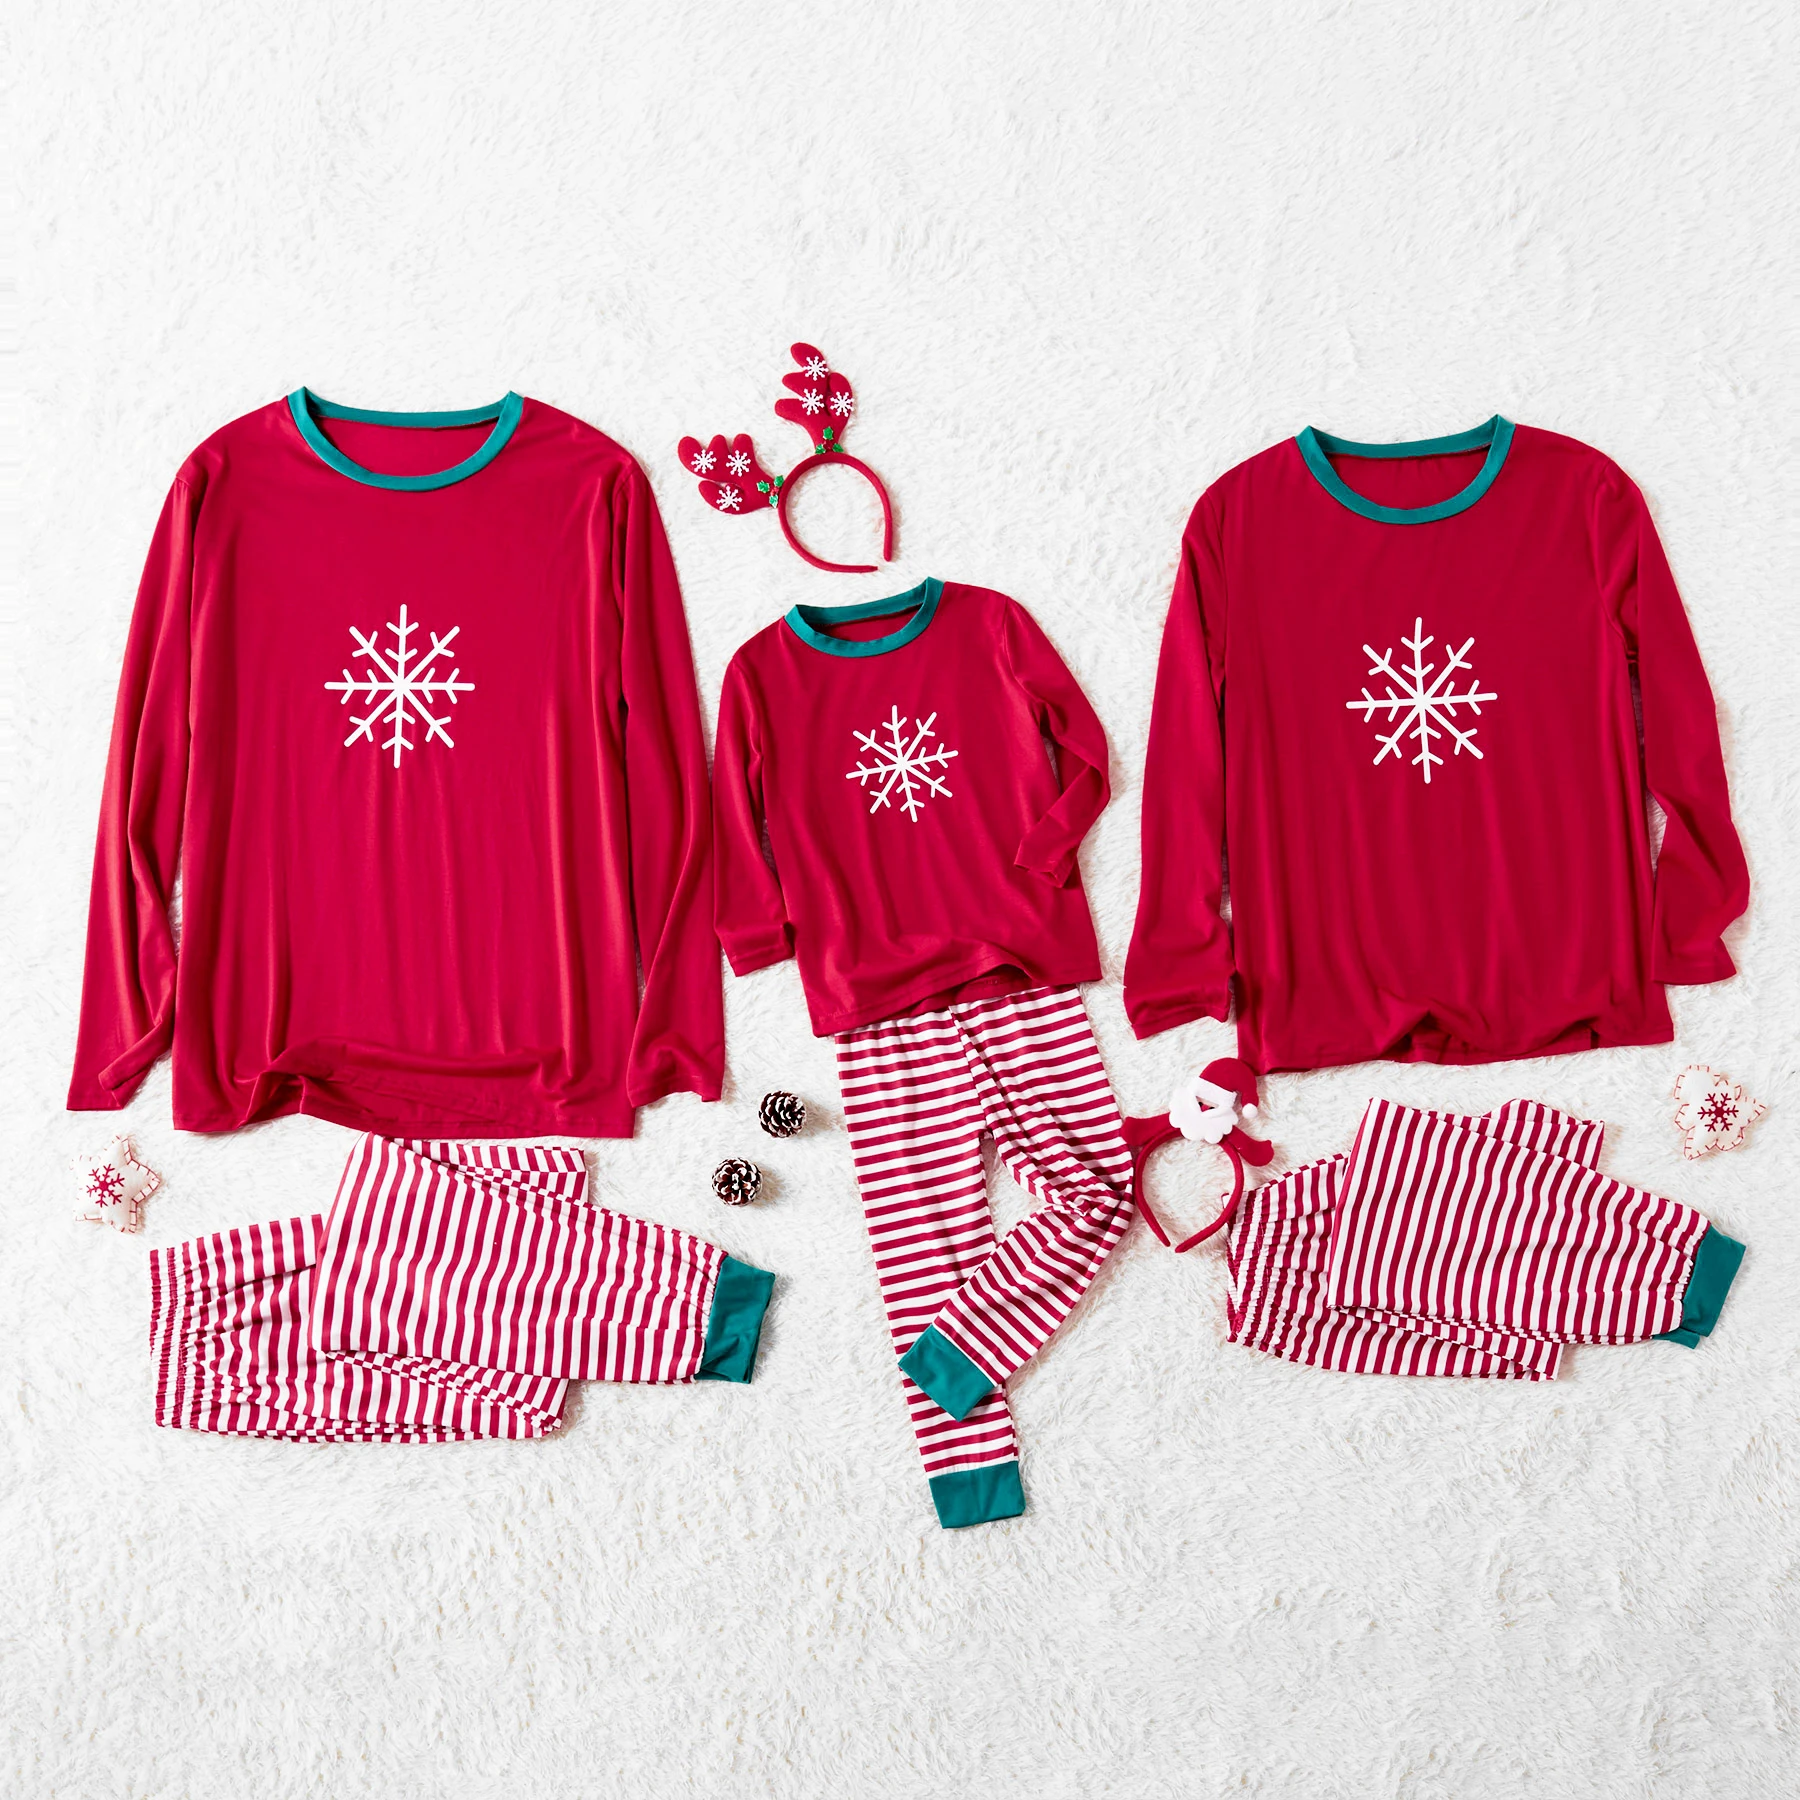 Matching Family Christmas Boys Girls Pajamas Striped Kids Sleepwear Children Clothes